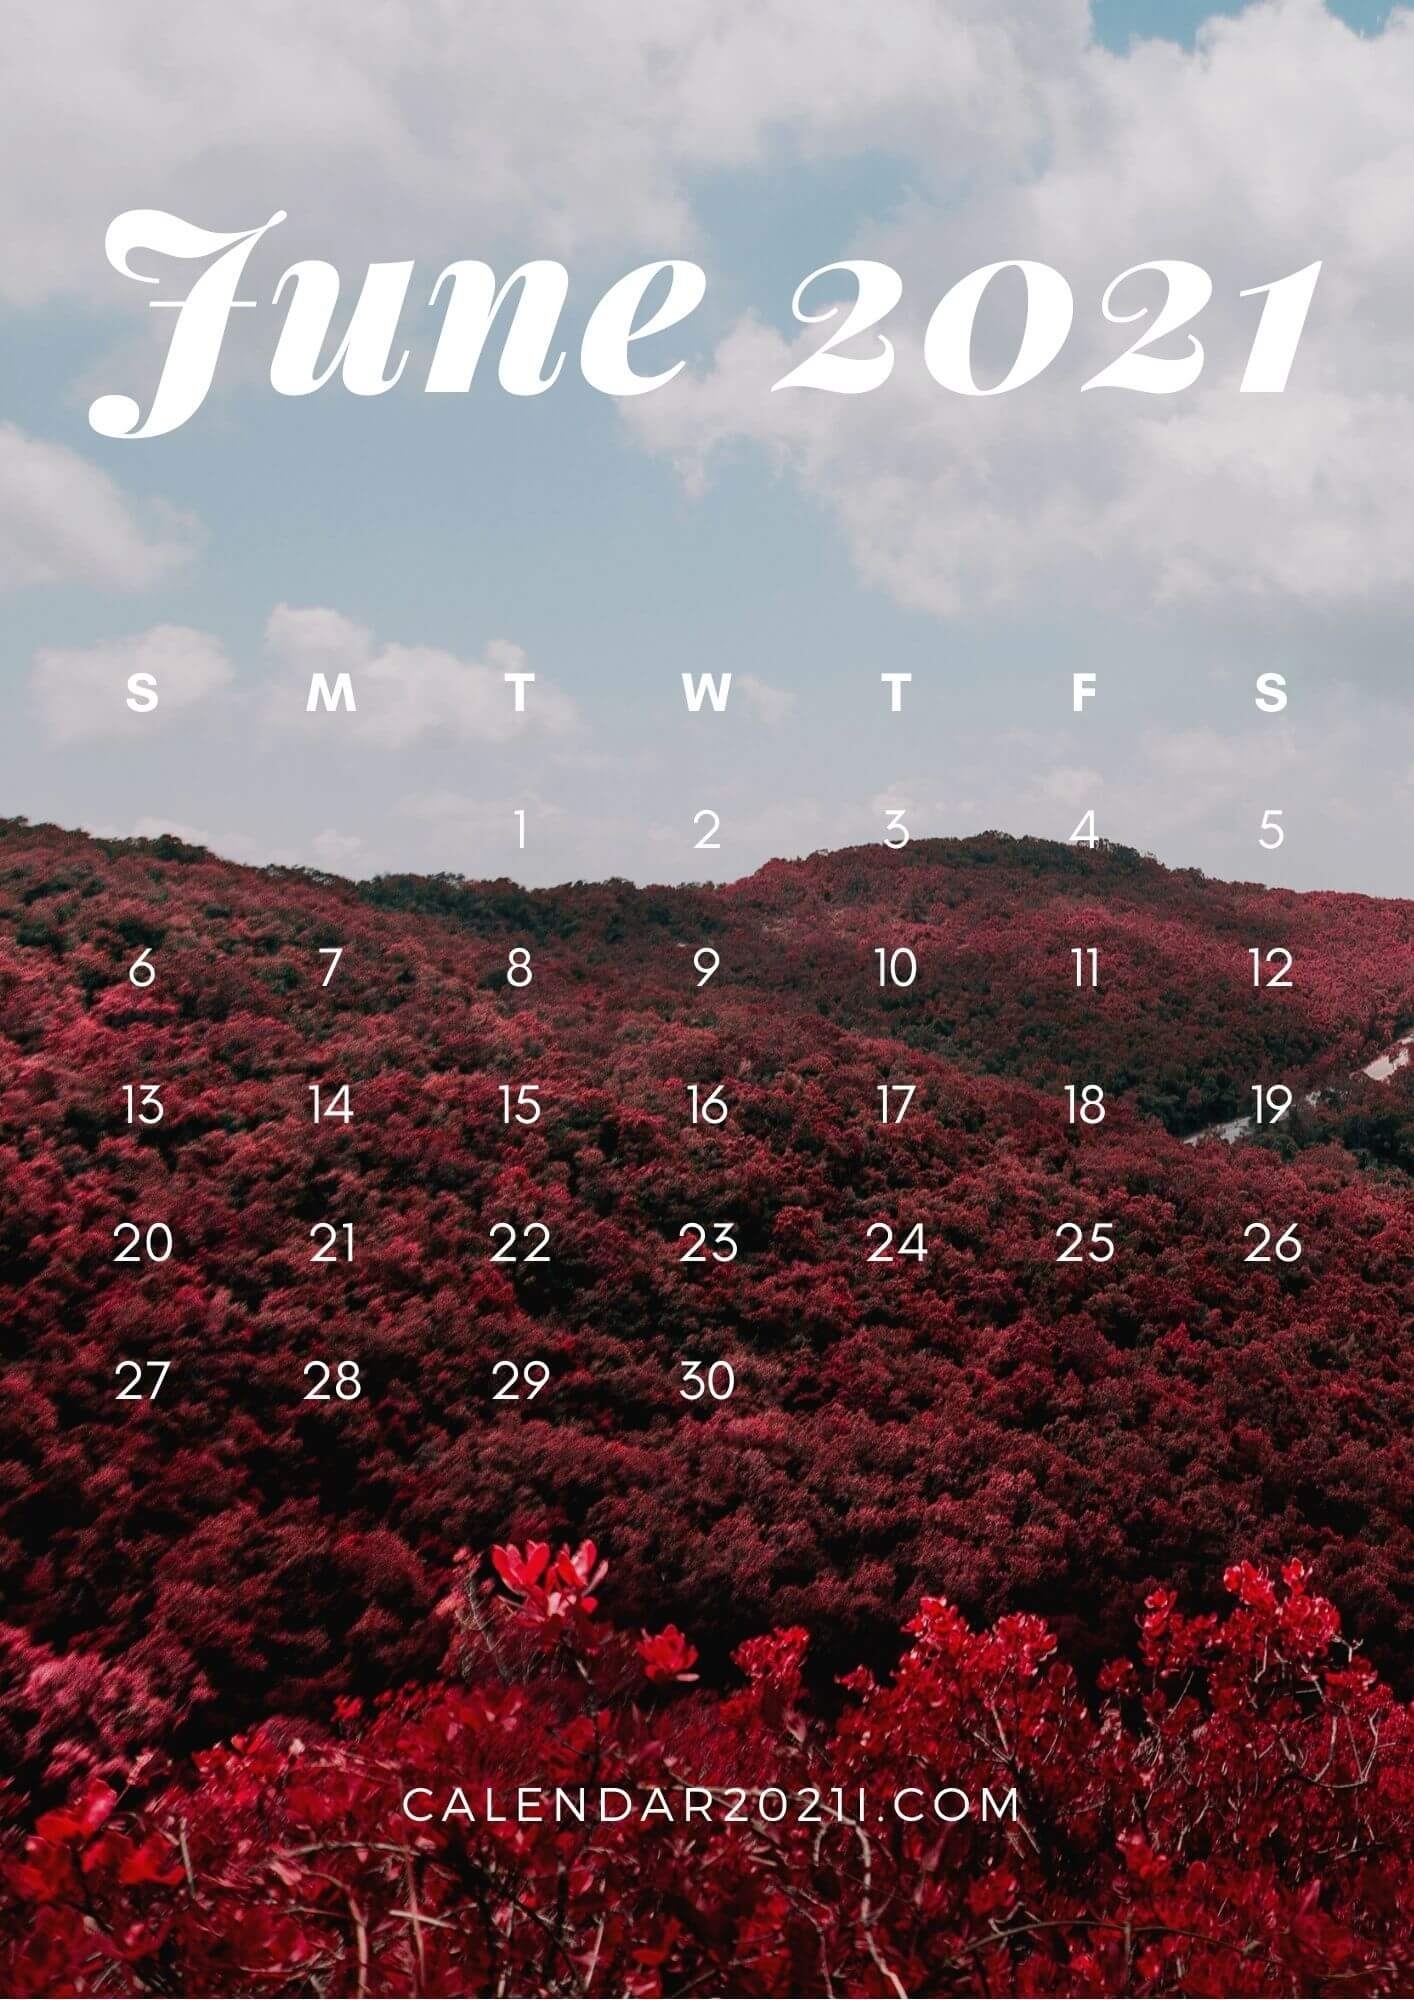 Cute June 2021 Calendar Floral Wallpaper For Desktop